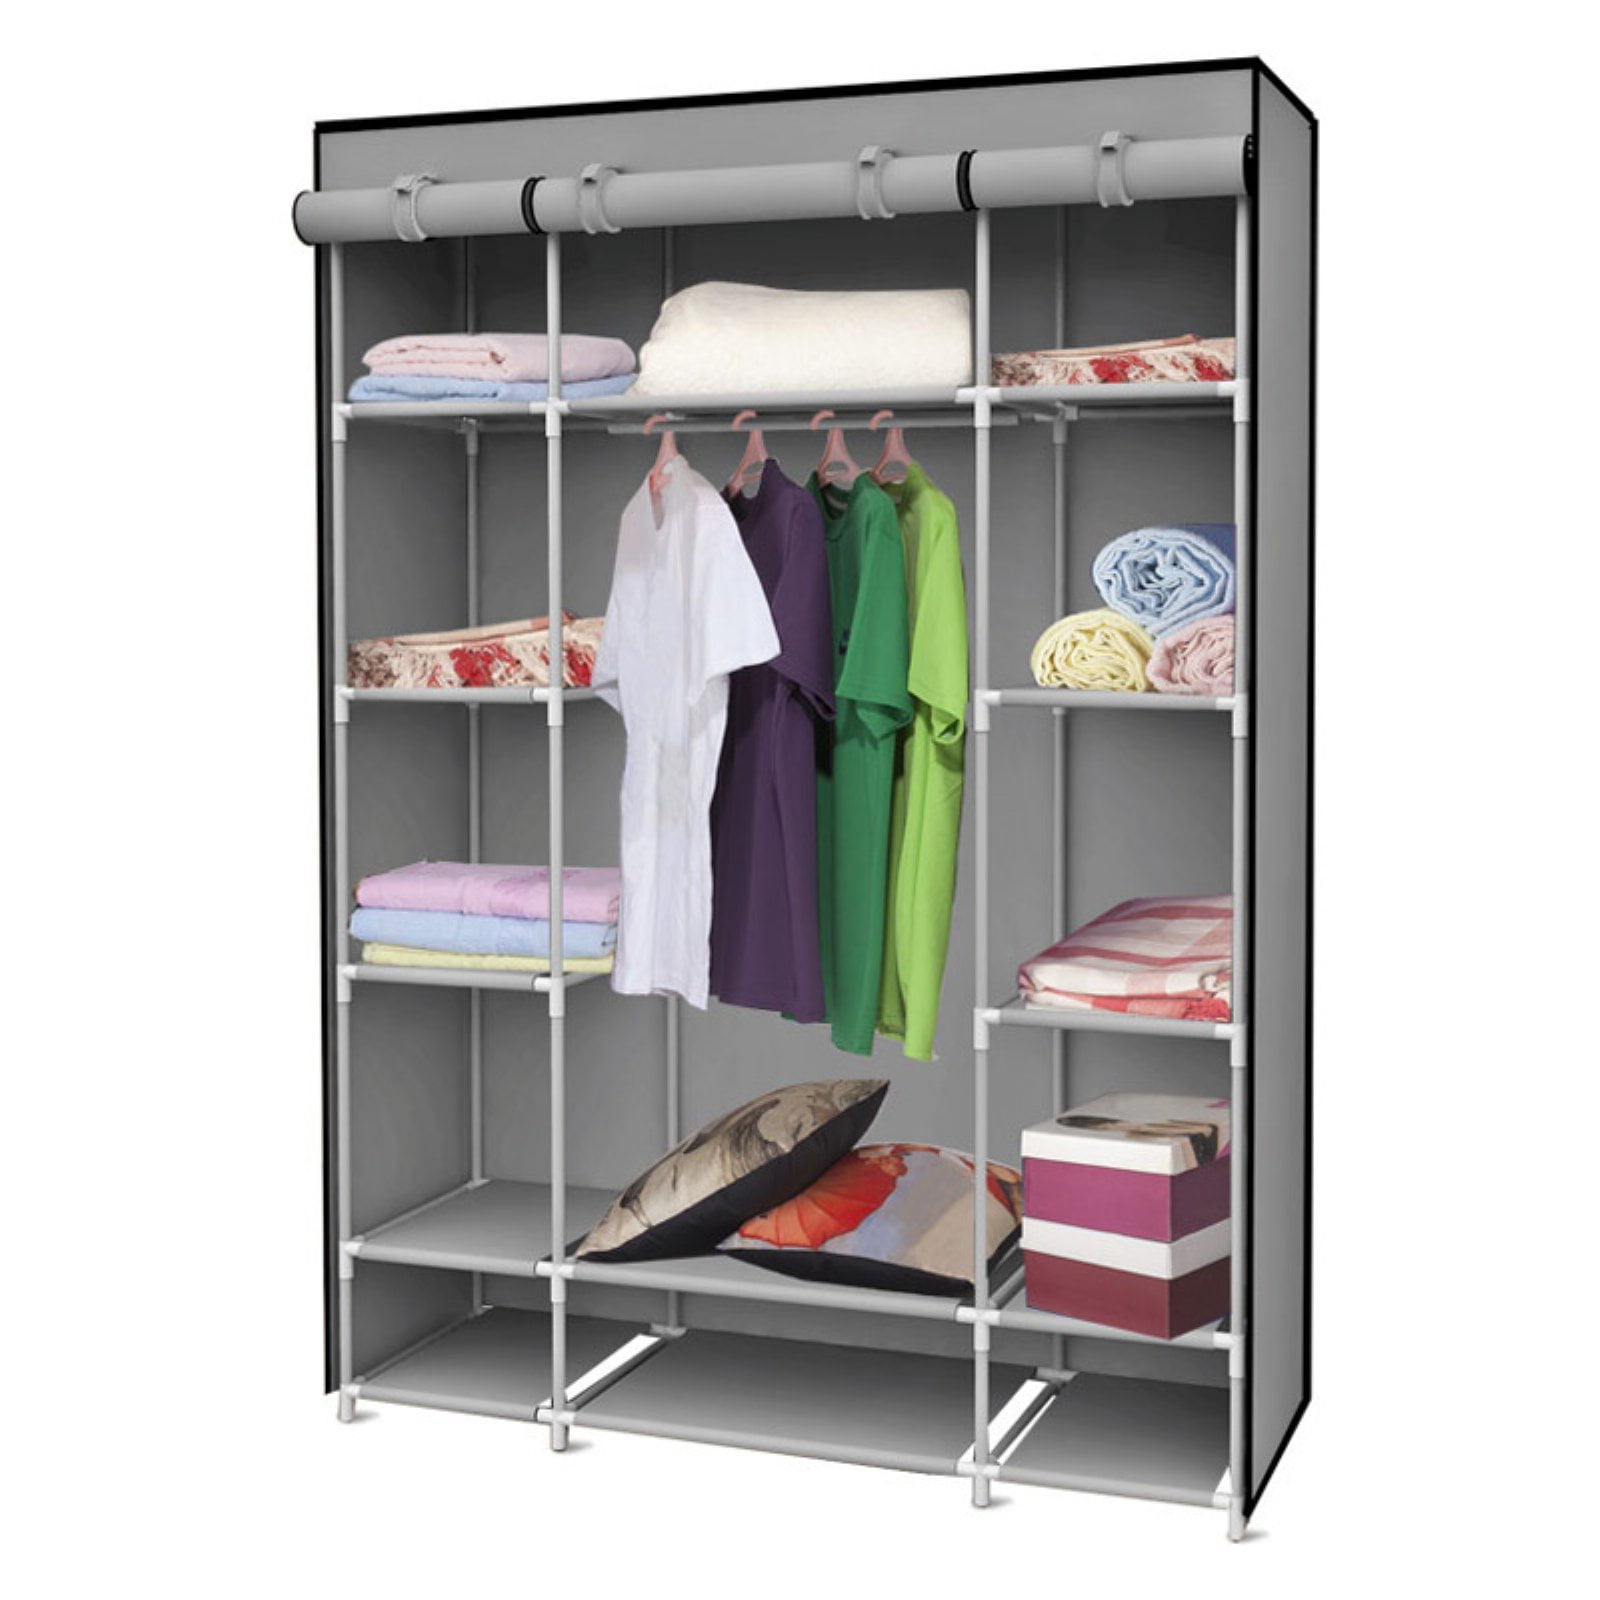 Basics Fabric 4-Drawer Storage Organizer Unit for Closet, Bronze